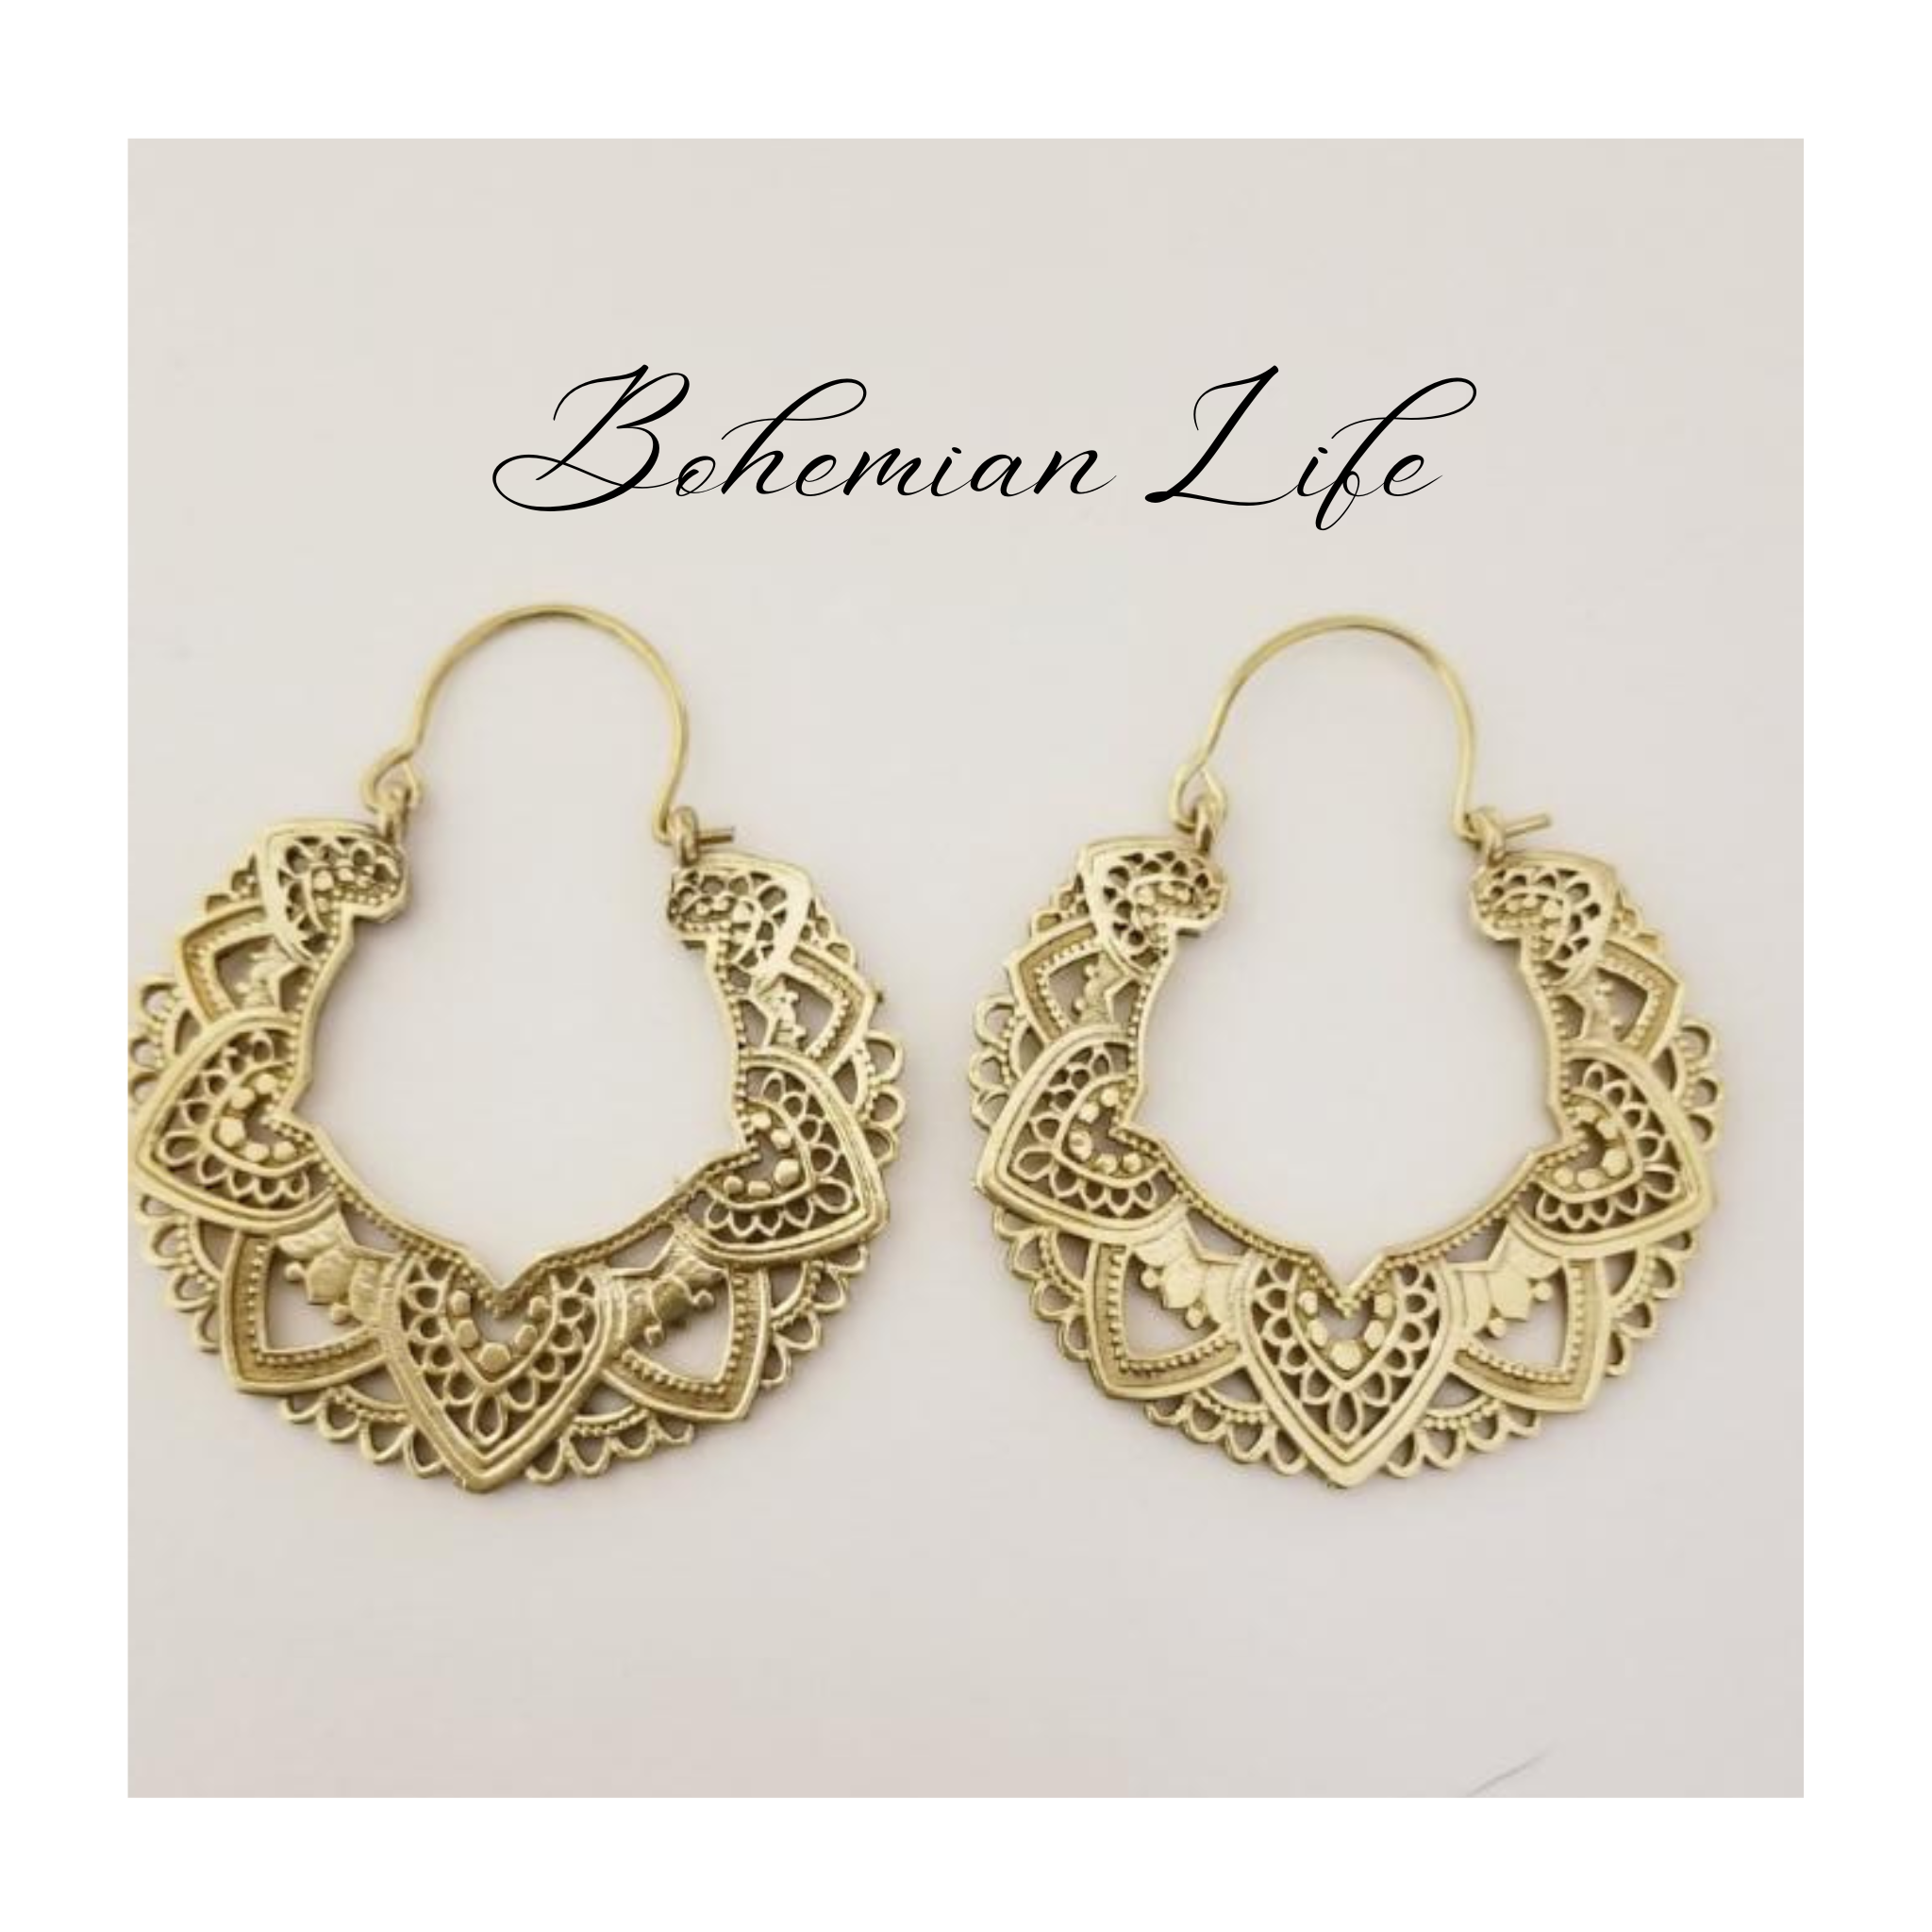 Gold hoop earrings with lacy filigree below the words "Bohemian Life"